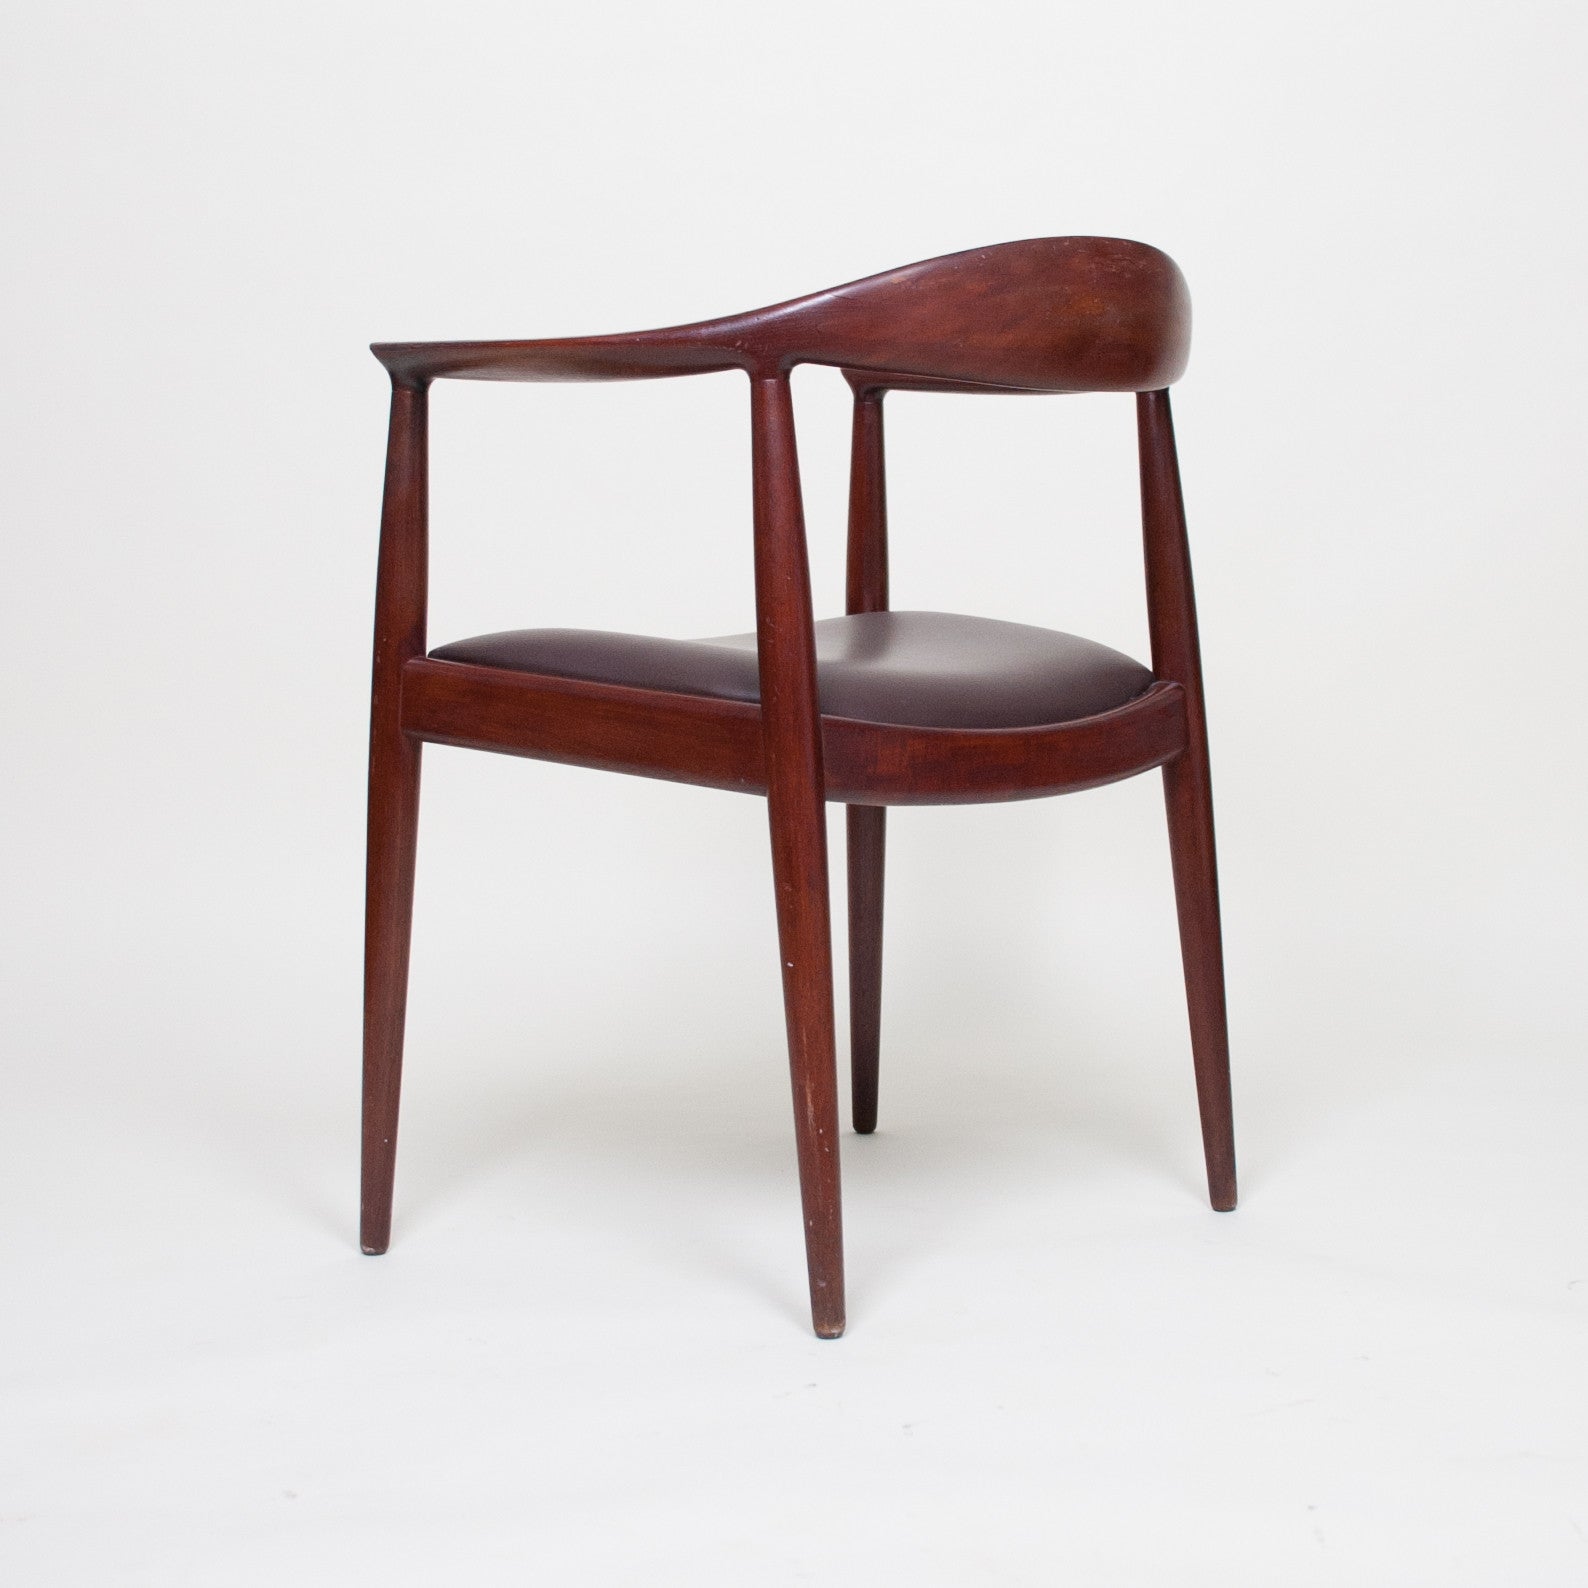 SOLD Hans Wegner Round The Chair Johannes Hansen For Knoll Vintage Teak Armchair